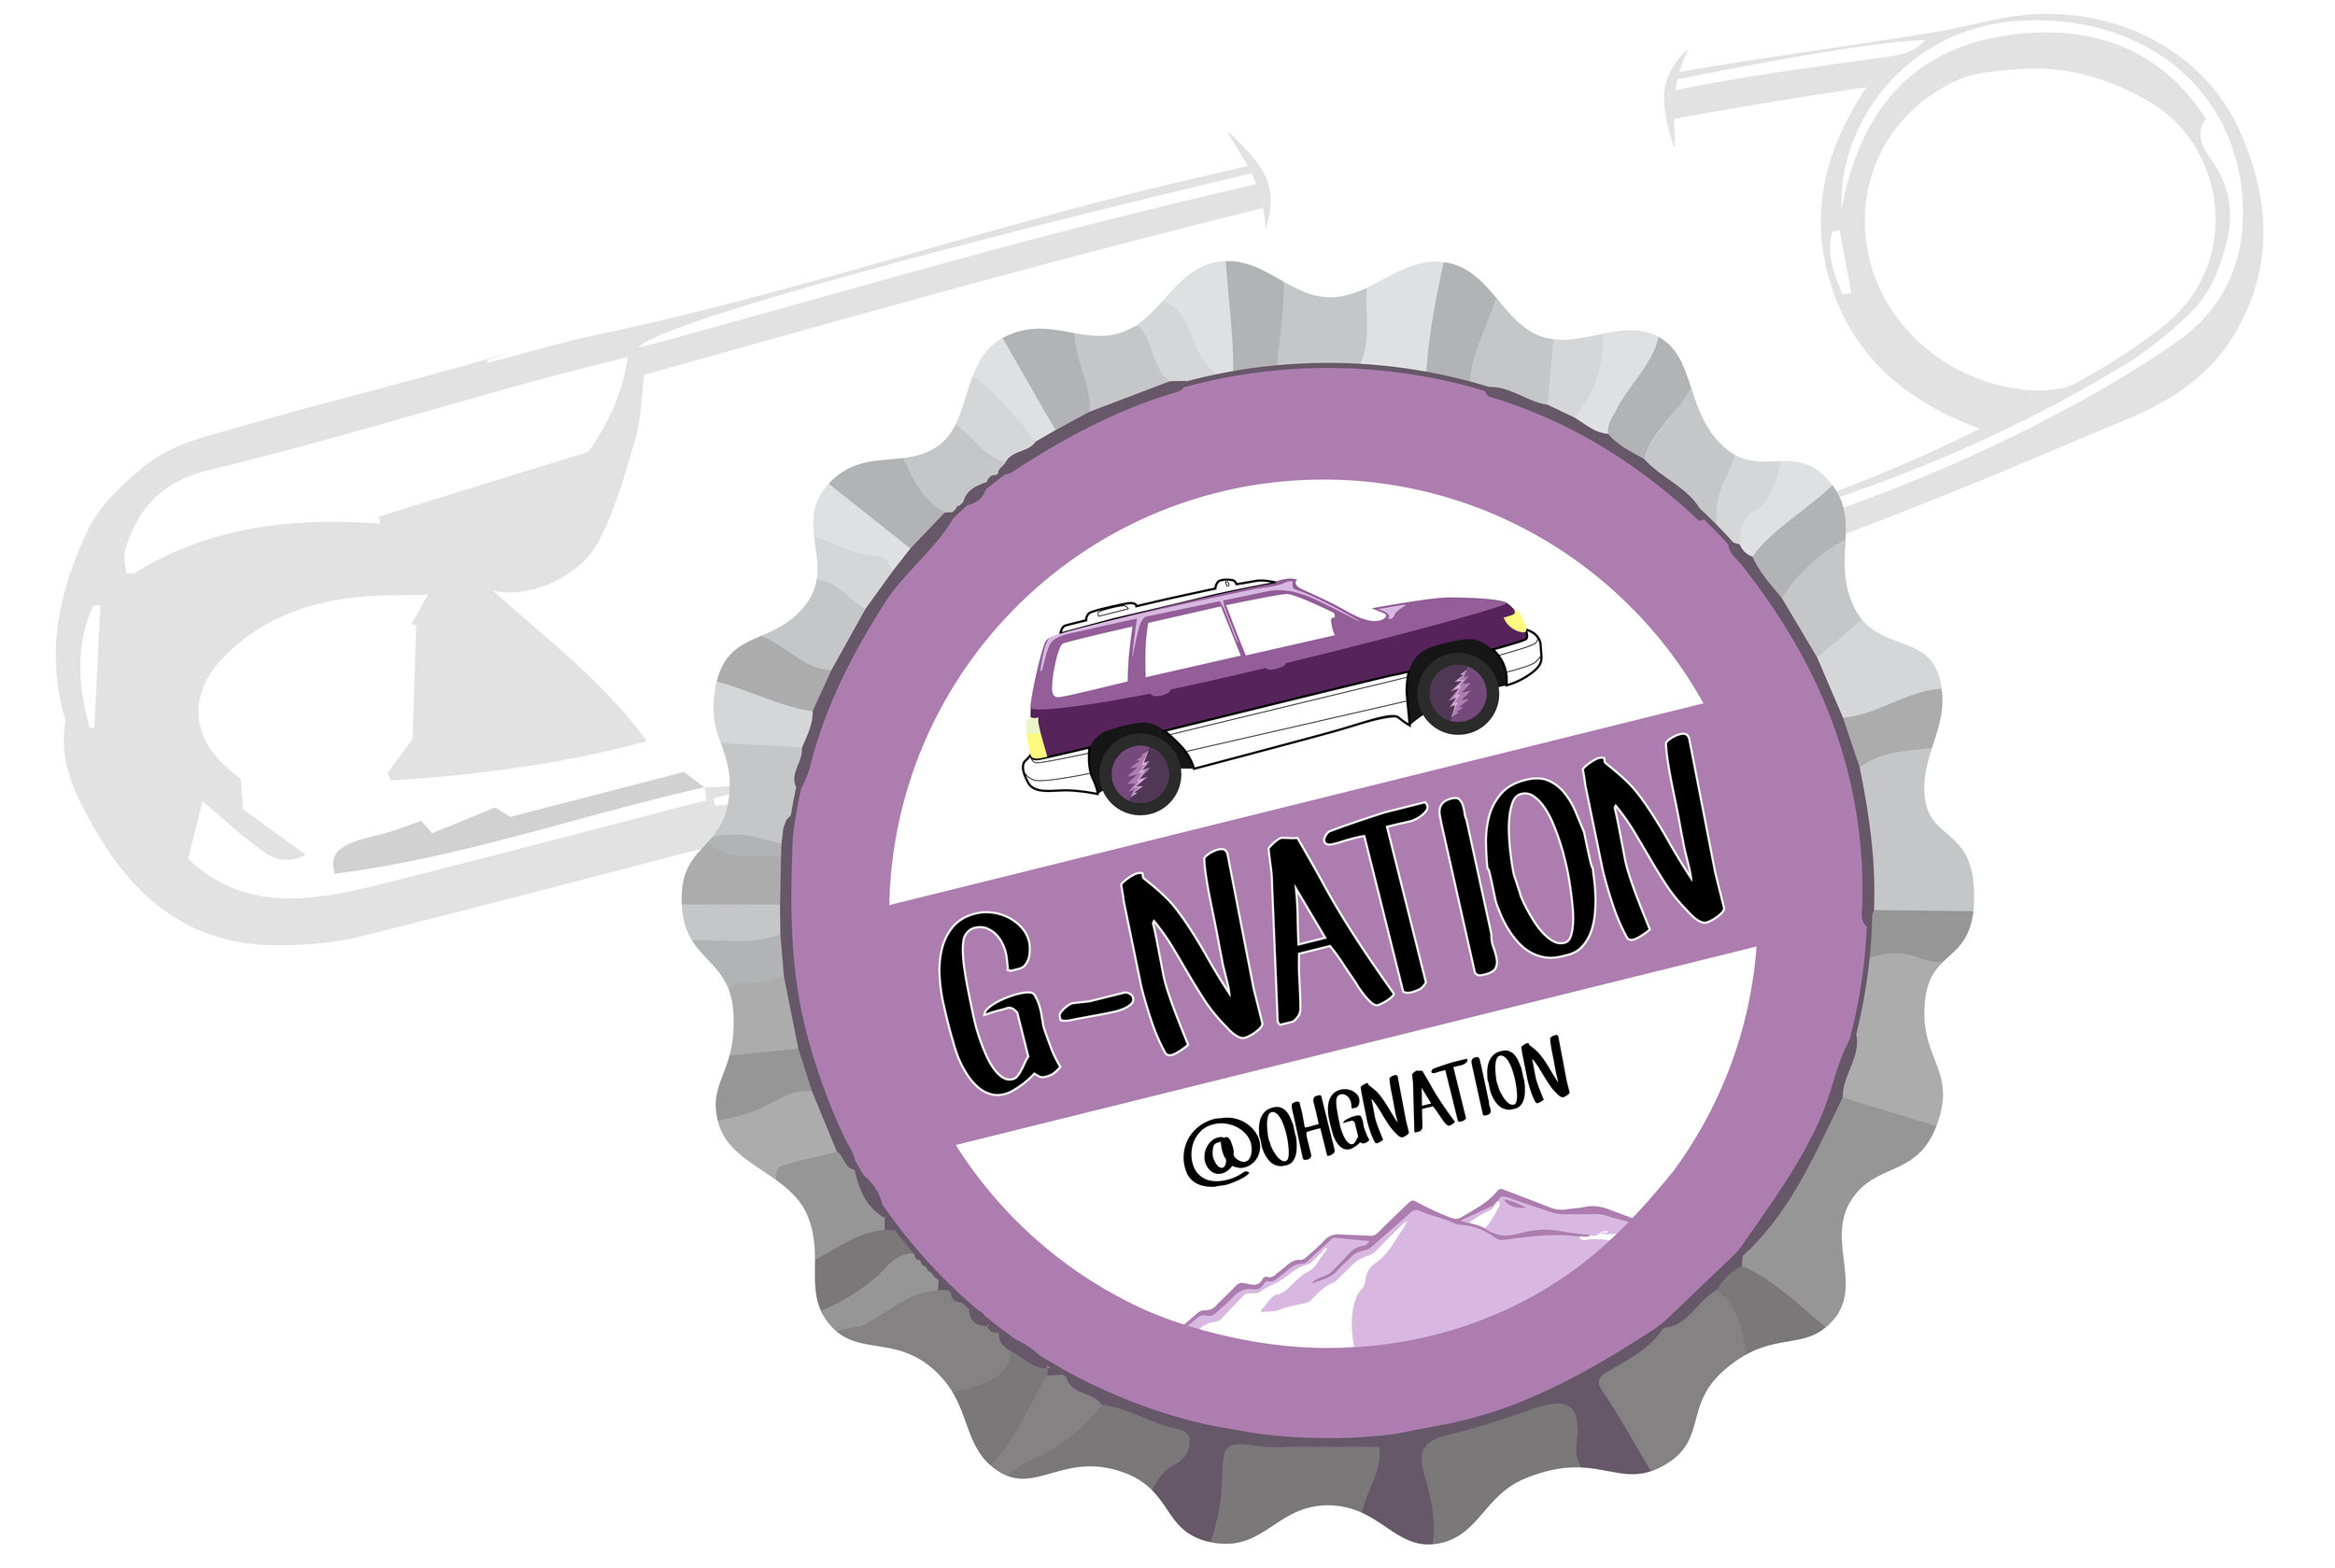 ohgnation logo full2-01-01.jpg